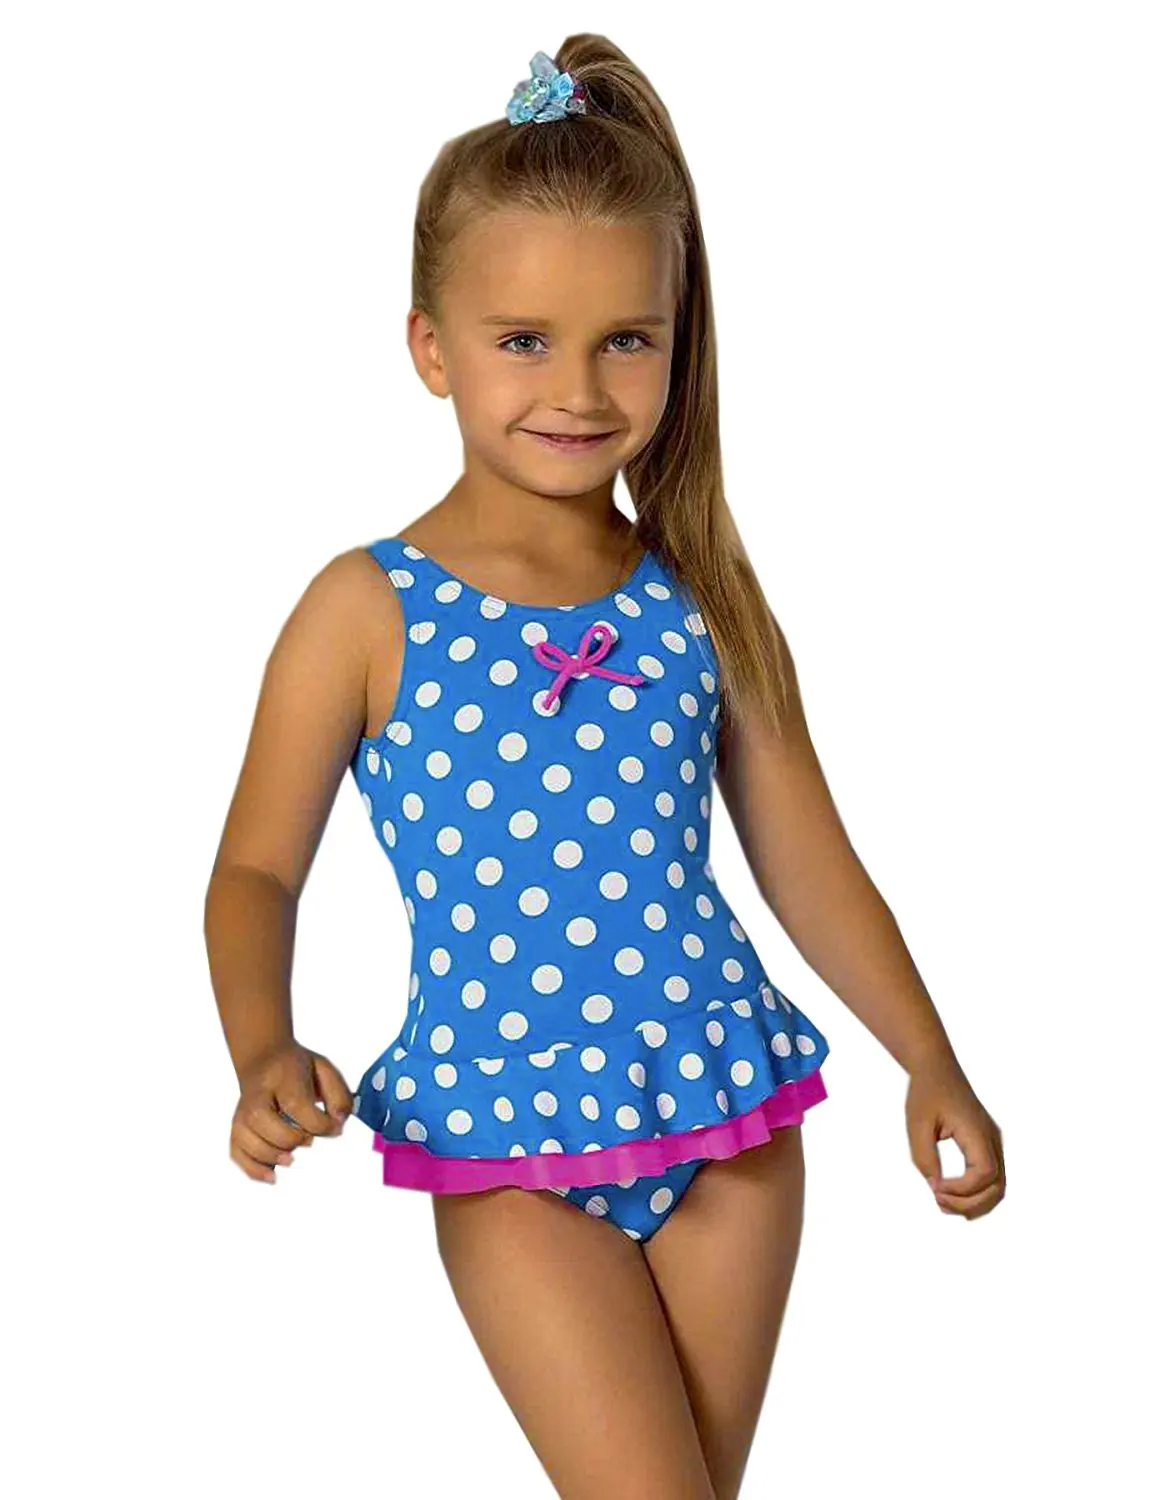 Varsany Personalised Swimsuit Girls Swimming Costume One Piece Kids